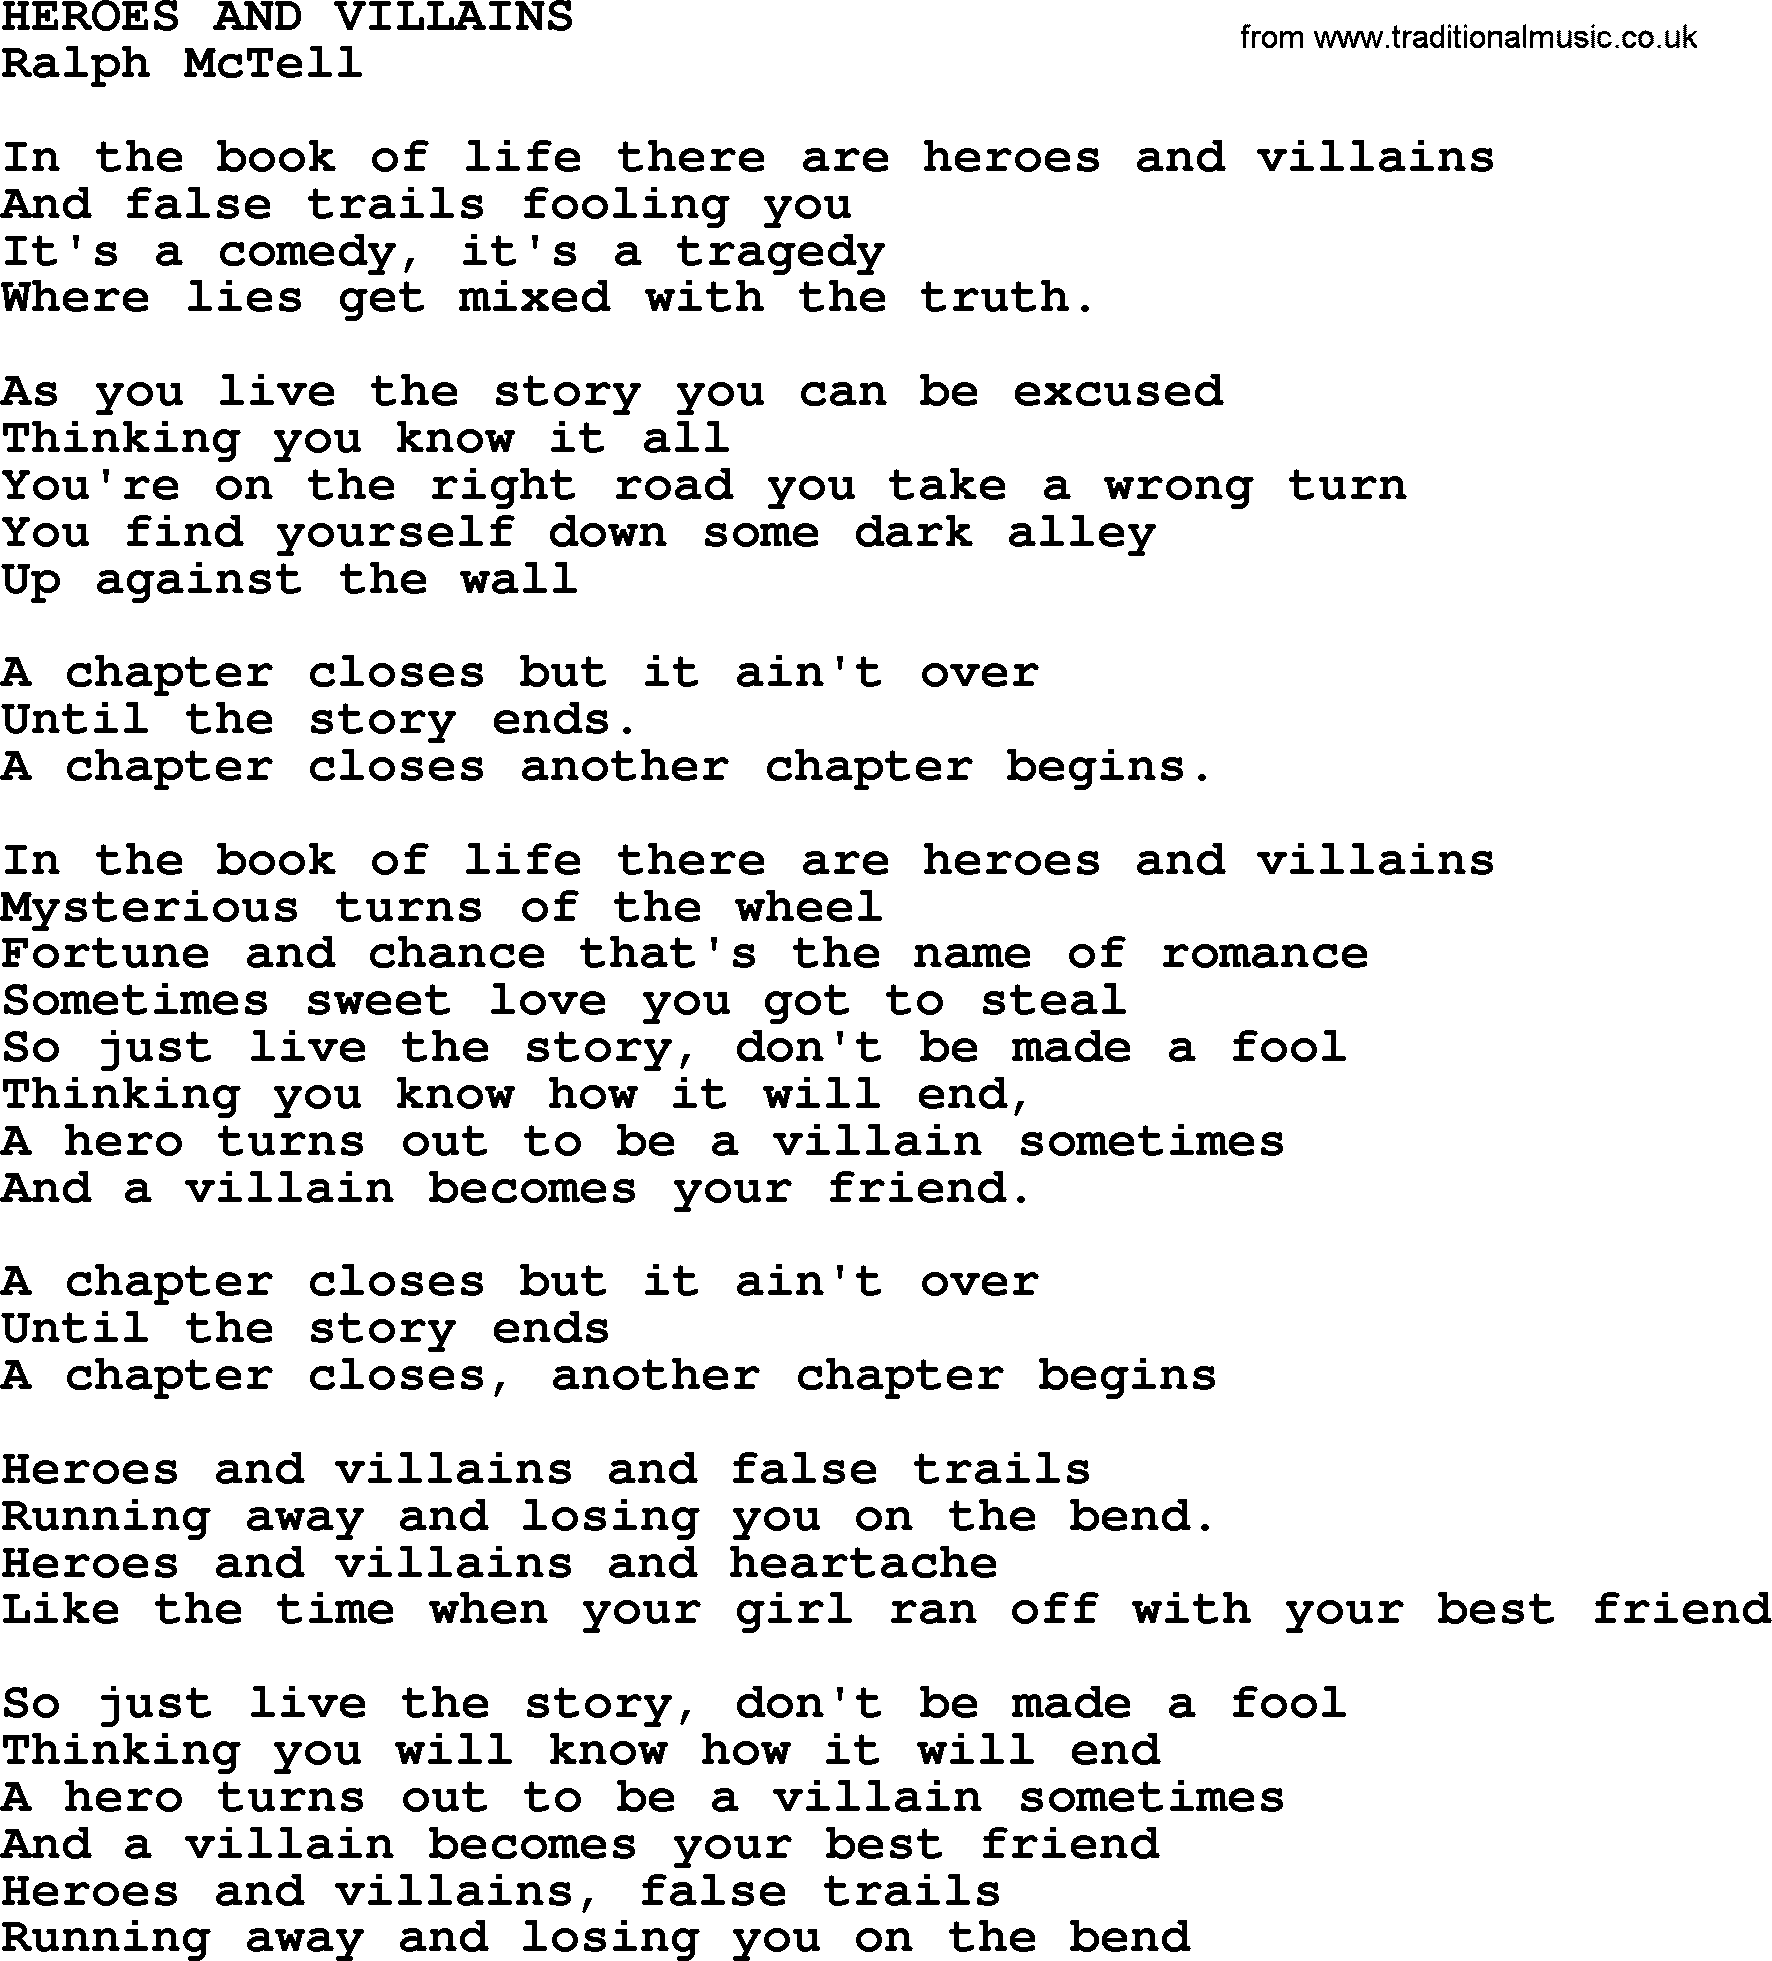 Ralph McTell Song: Heroes And Villains, lyrics